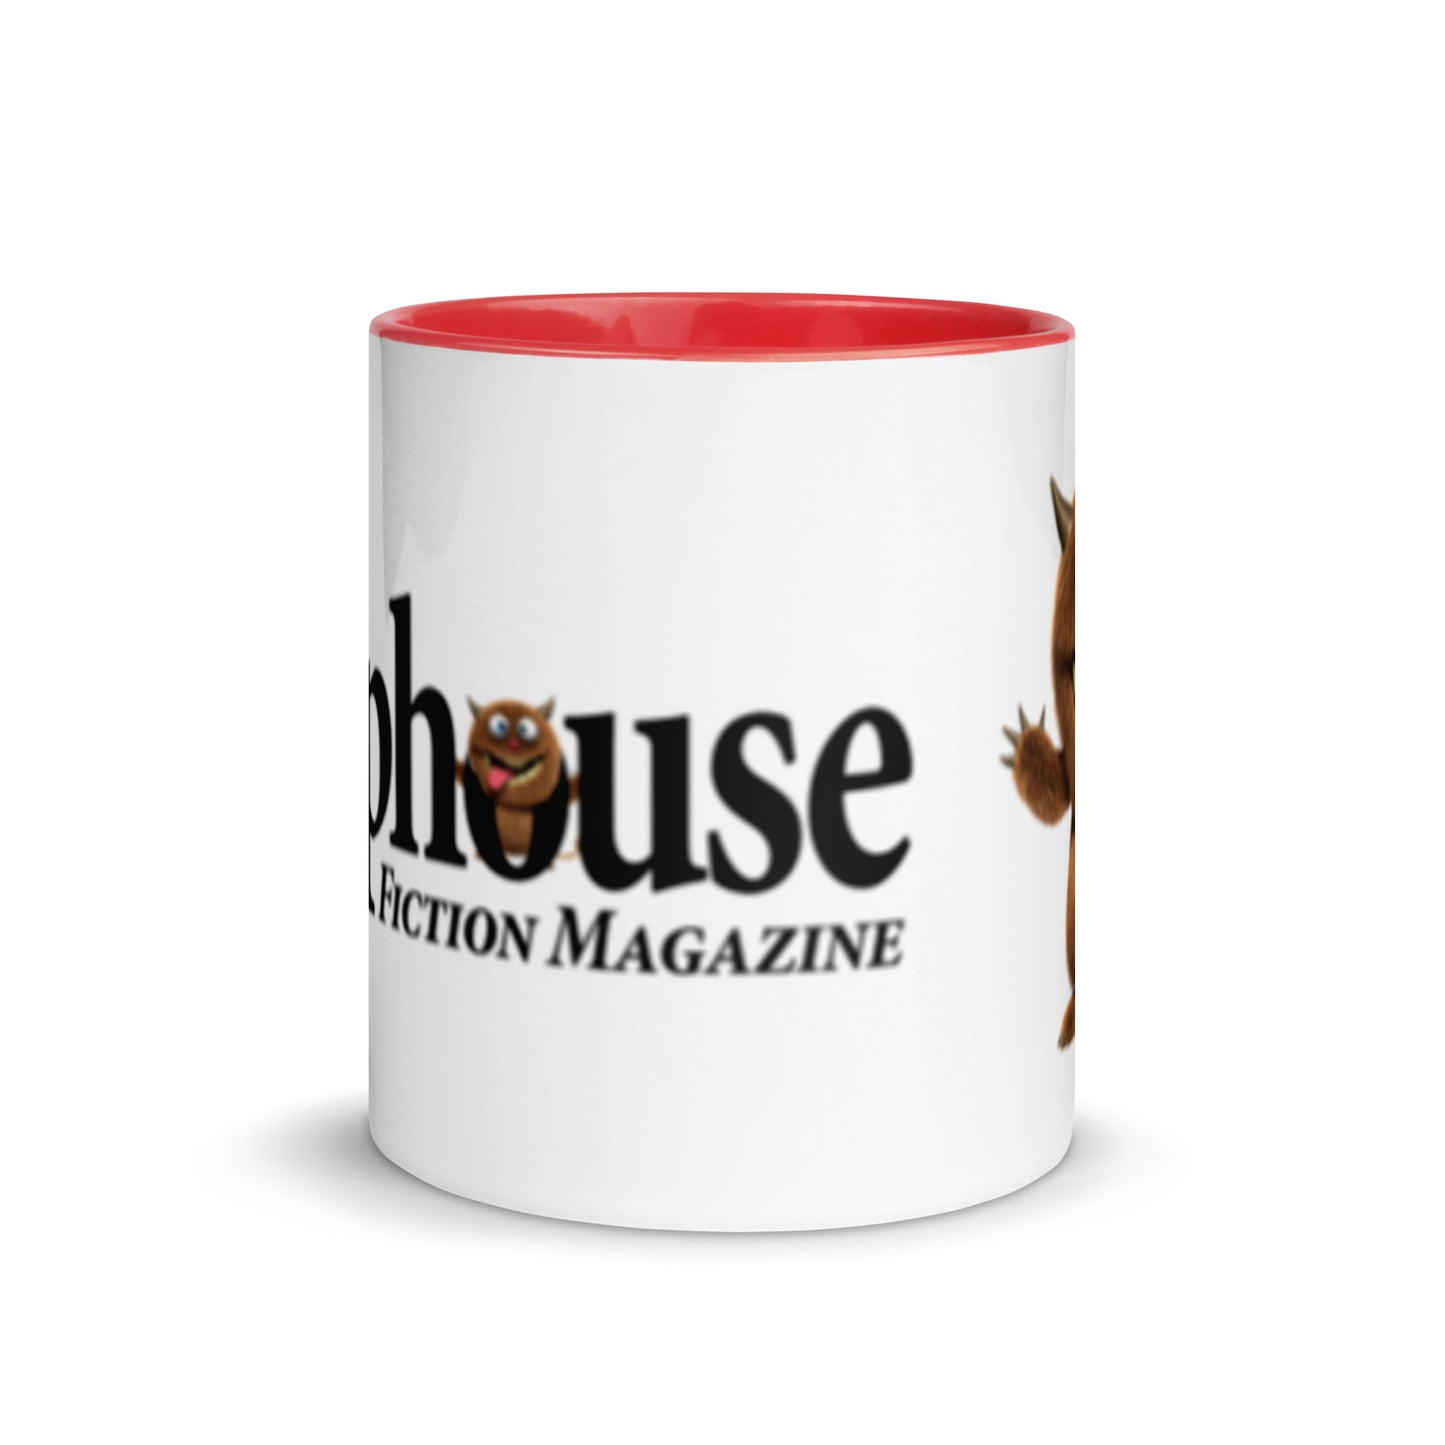 Bright & Goofy THUMPER & PULPHOUSE LOGO MUG with COLOR INSIDE - Coffee Tea Mug Fun & Humorous